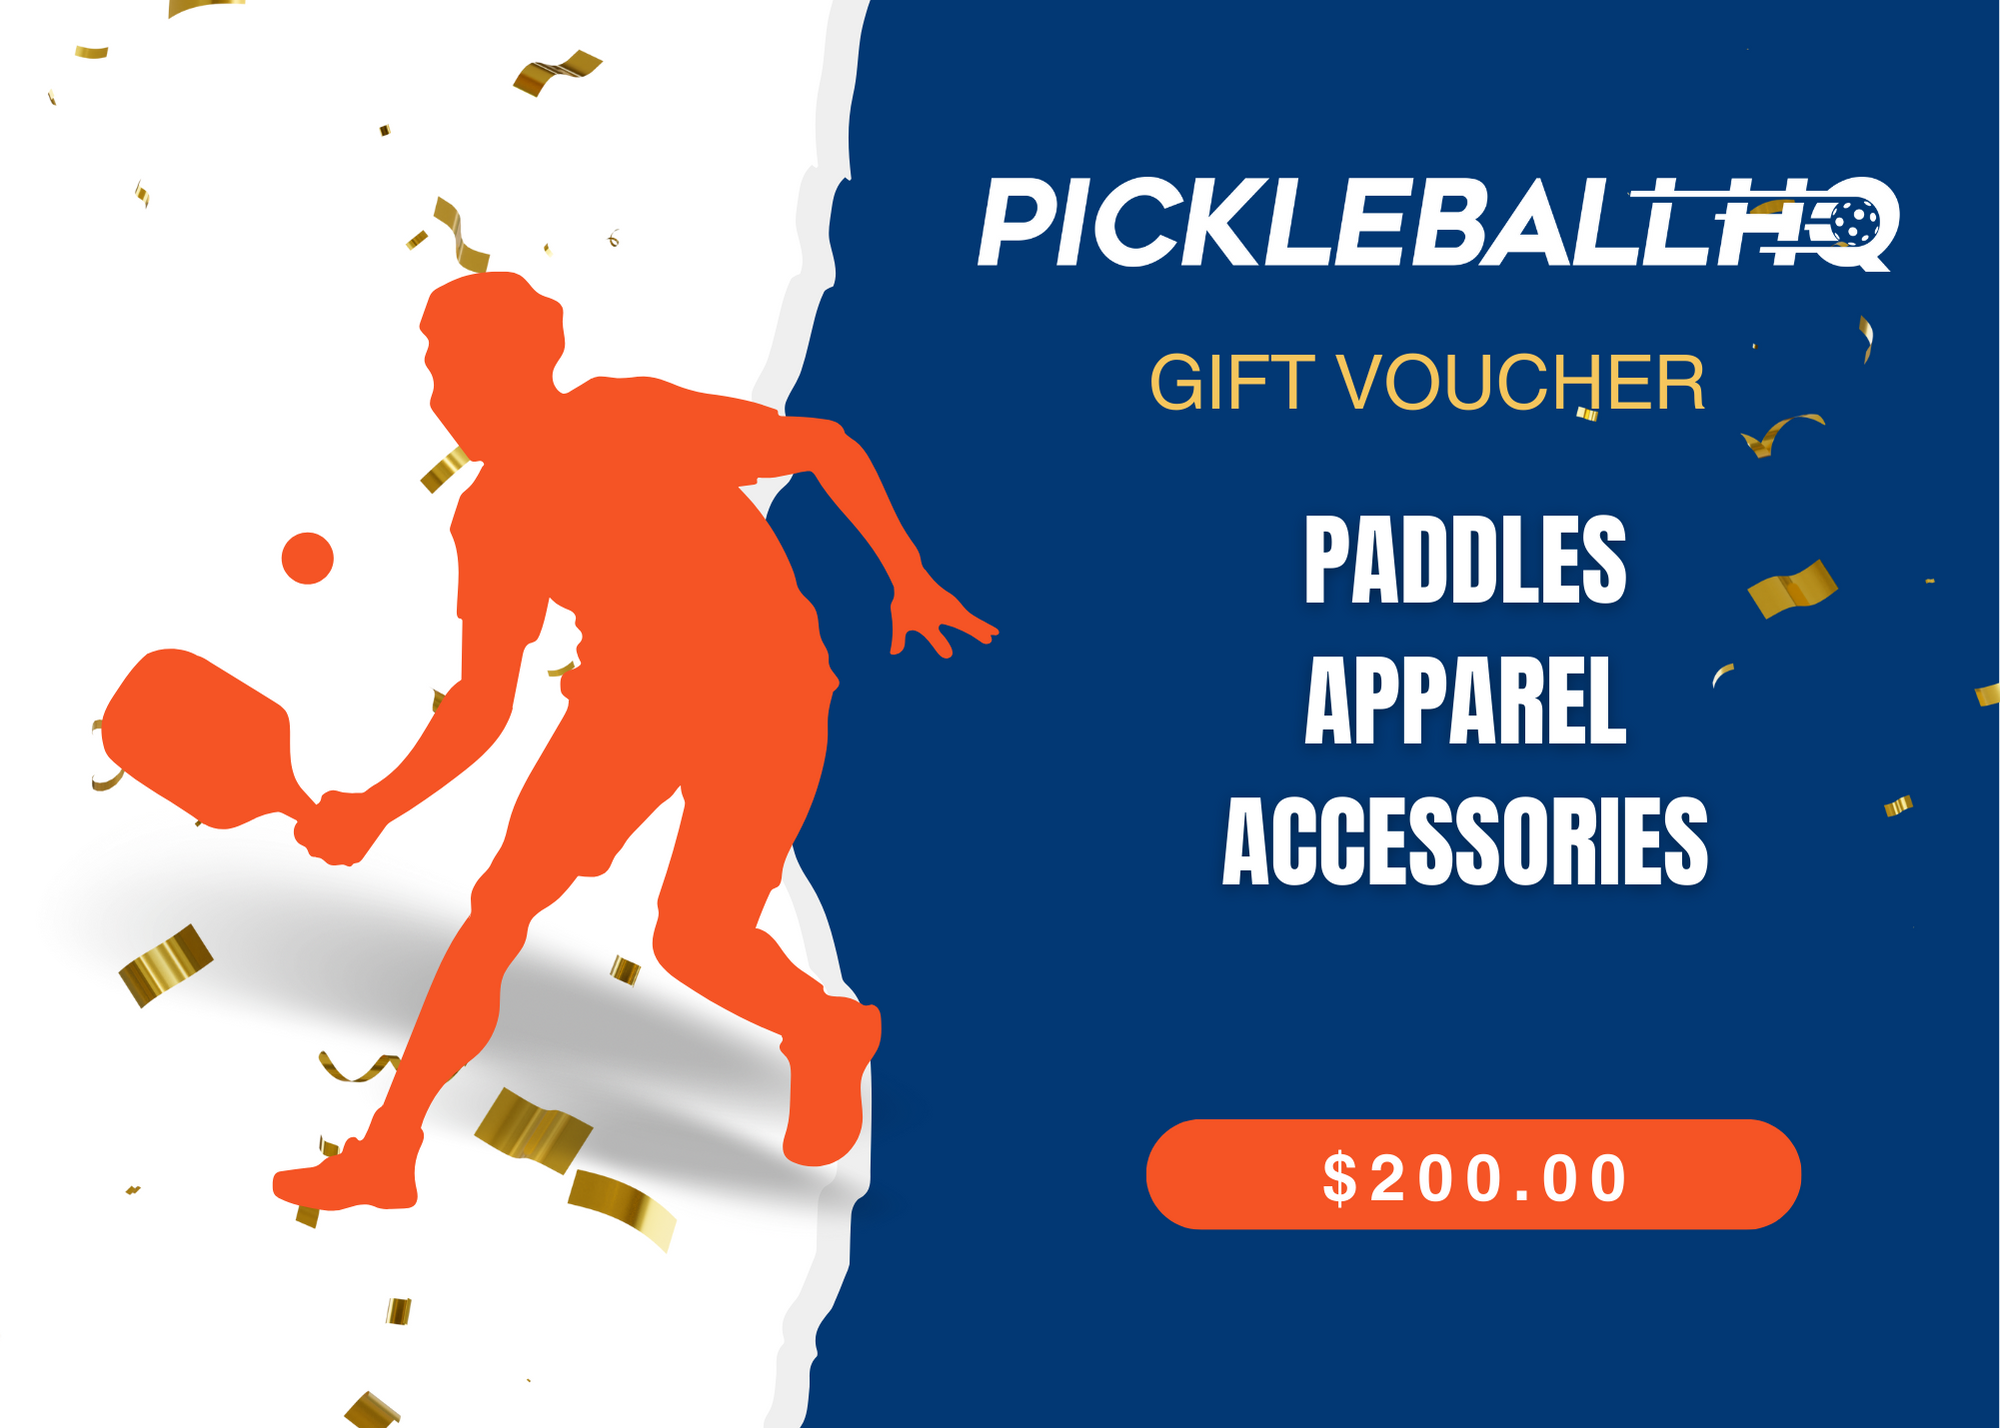 Pickleball HQ Gift Voucher $200